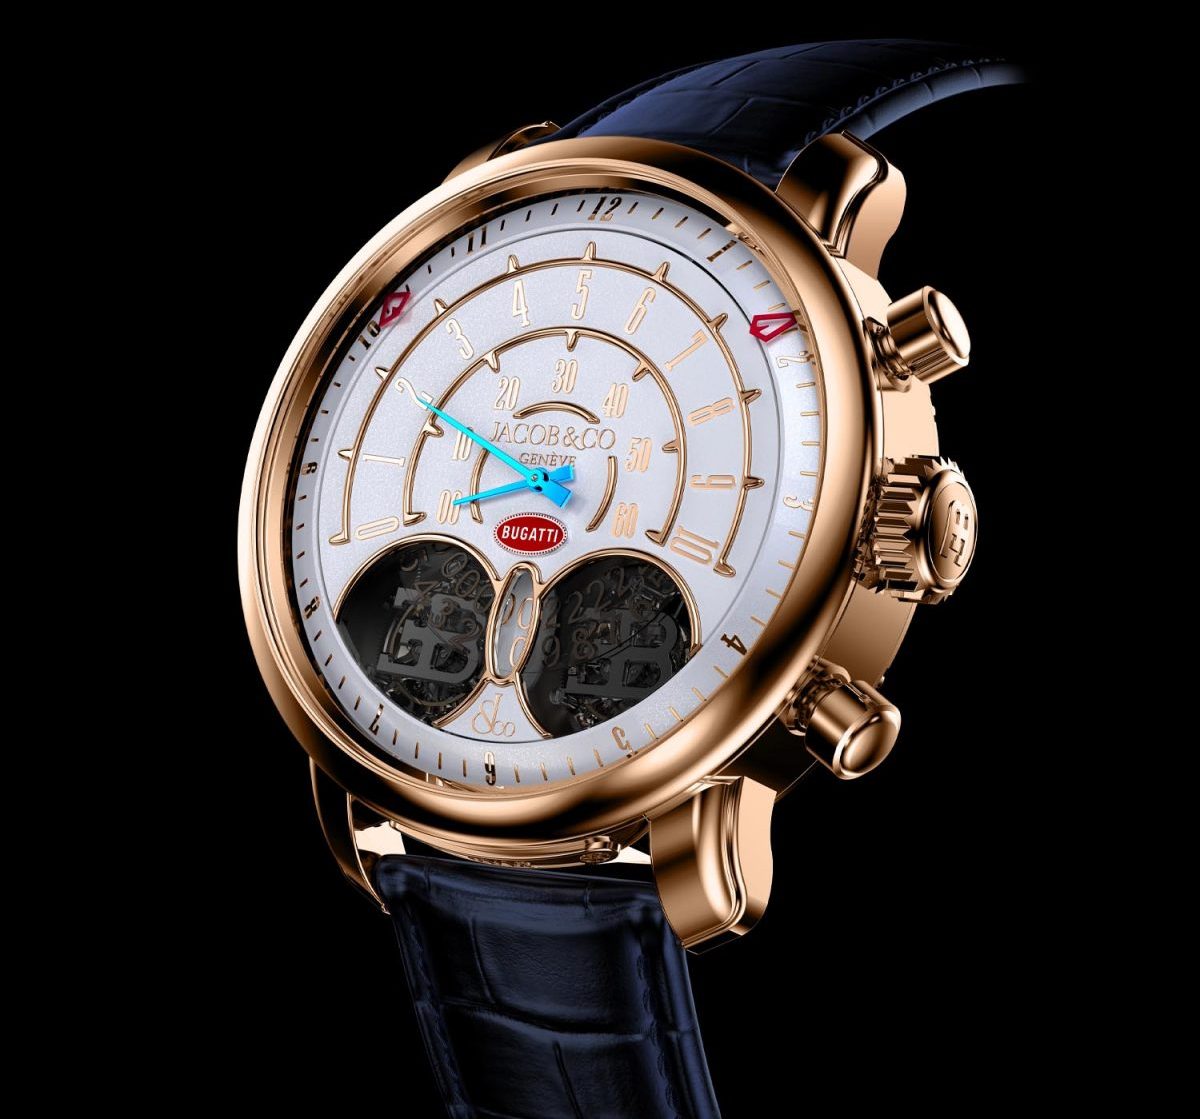 Jacob & Co’s Jean Bugatti Tourbillon Chronograph